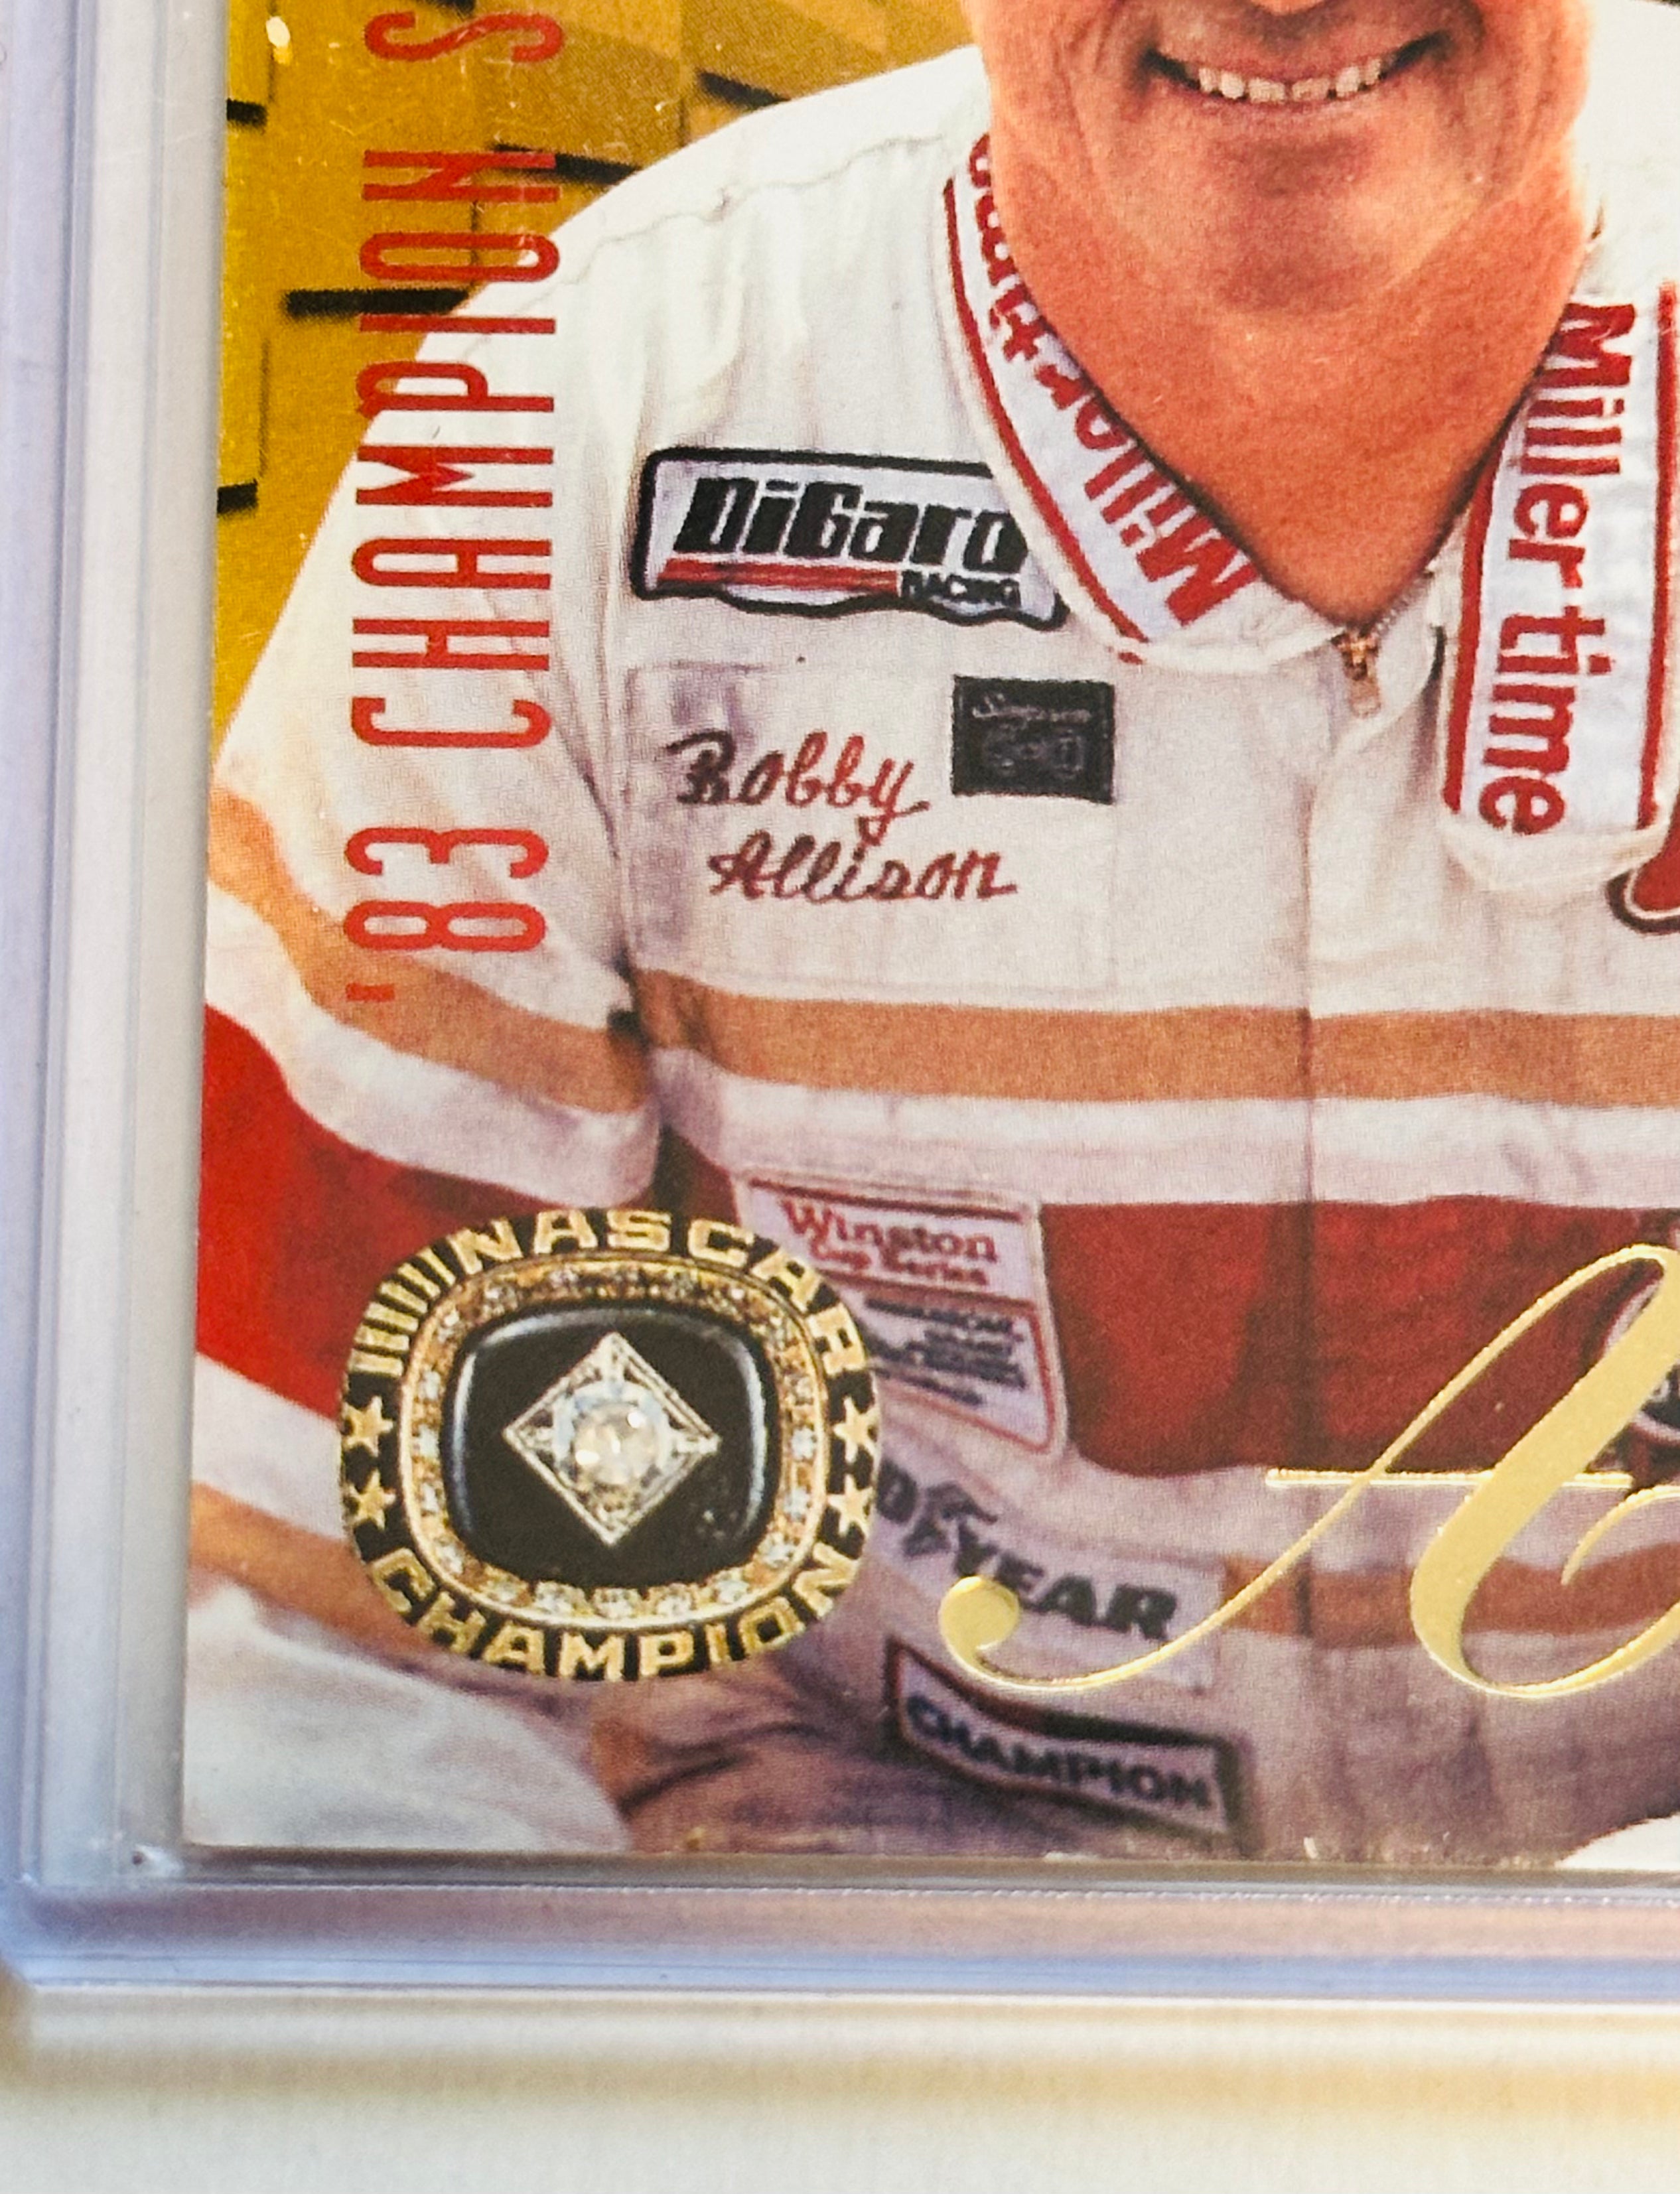 NASCAR Bobby Allison unique racing promo card with Diamond 1996